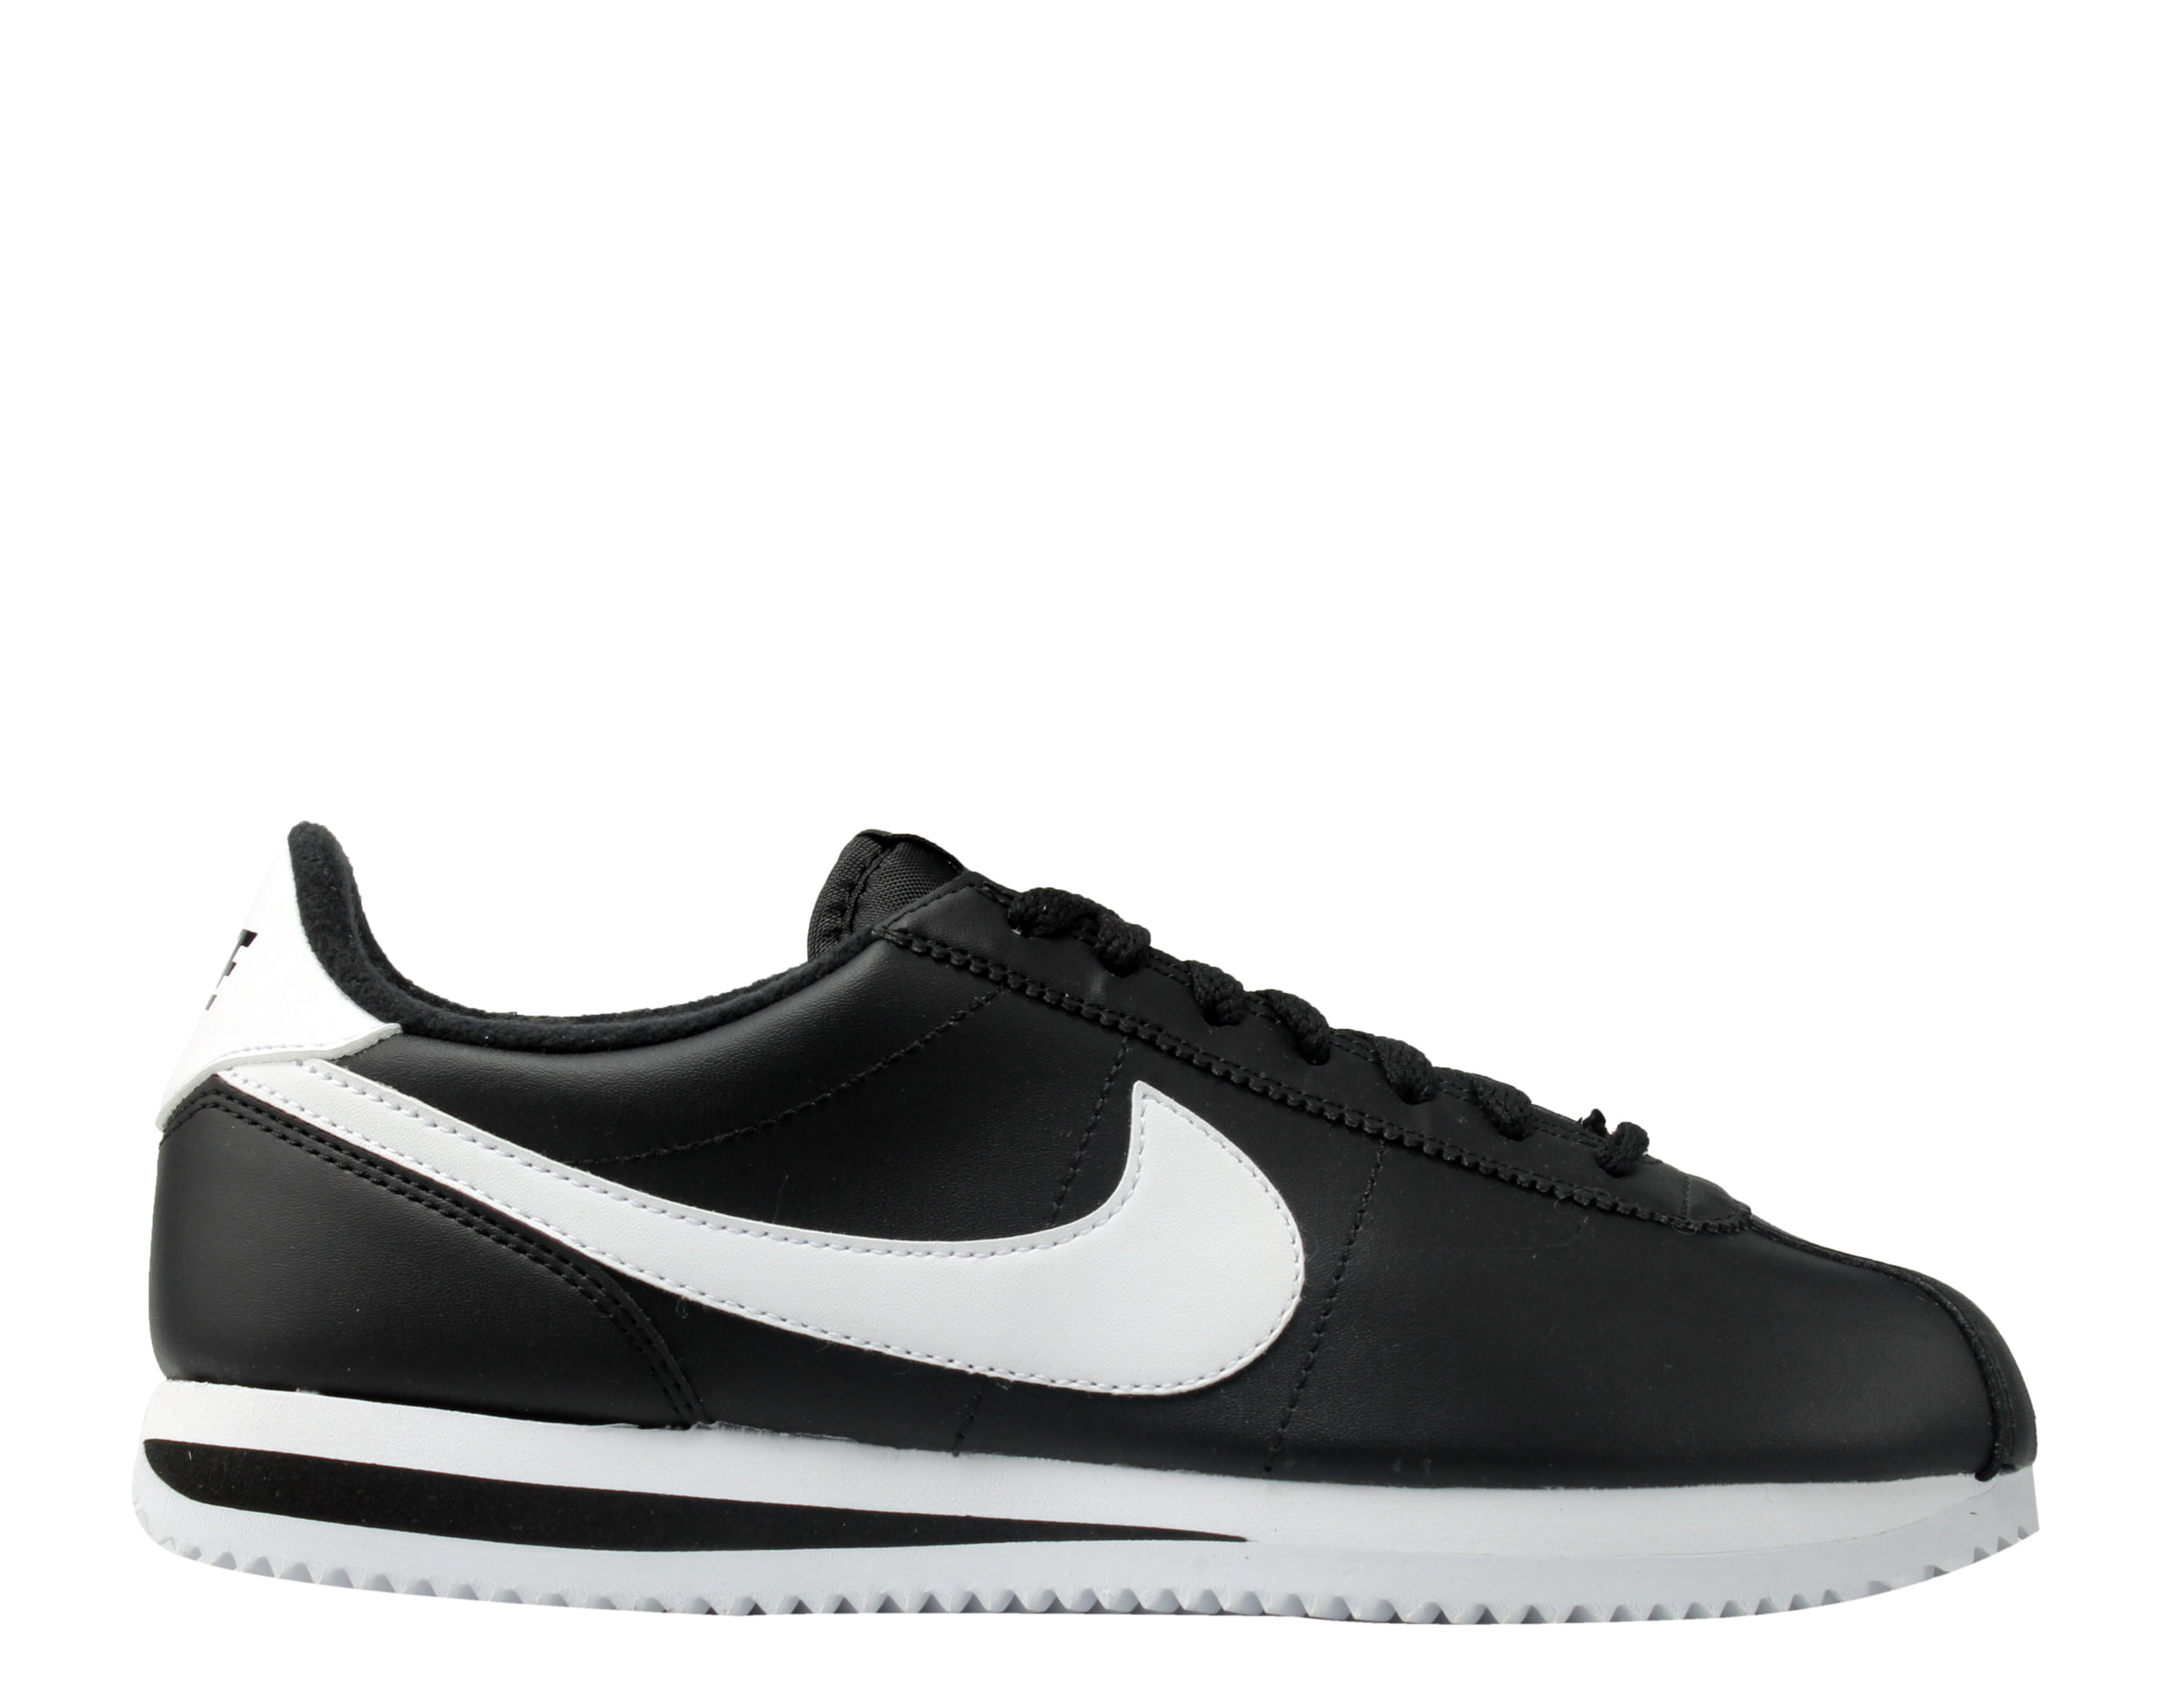 Huérfano comer colección Nike Cortez Basic Leather Men's Running Shoes Size 10.5 - Walmart.com